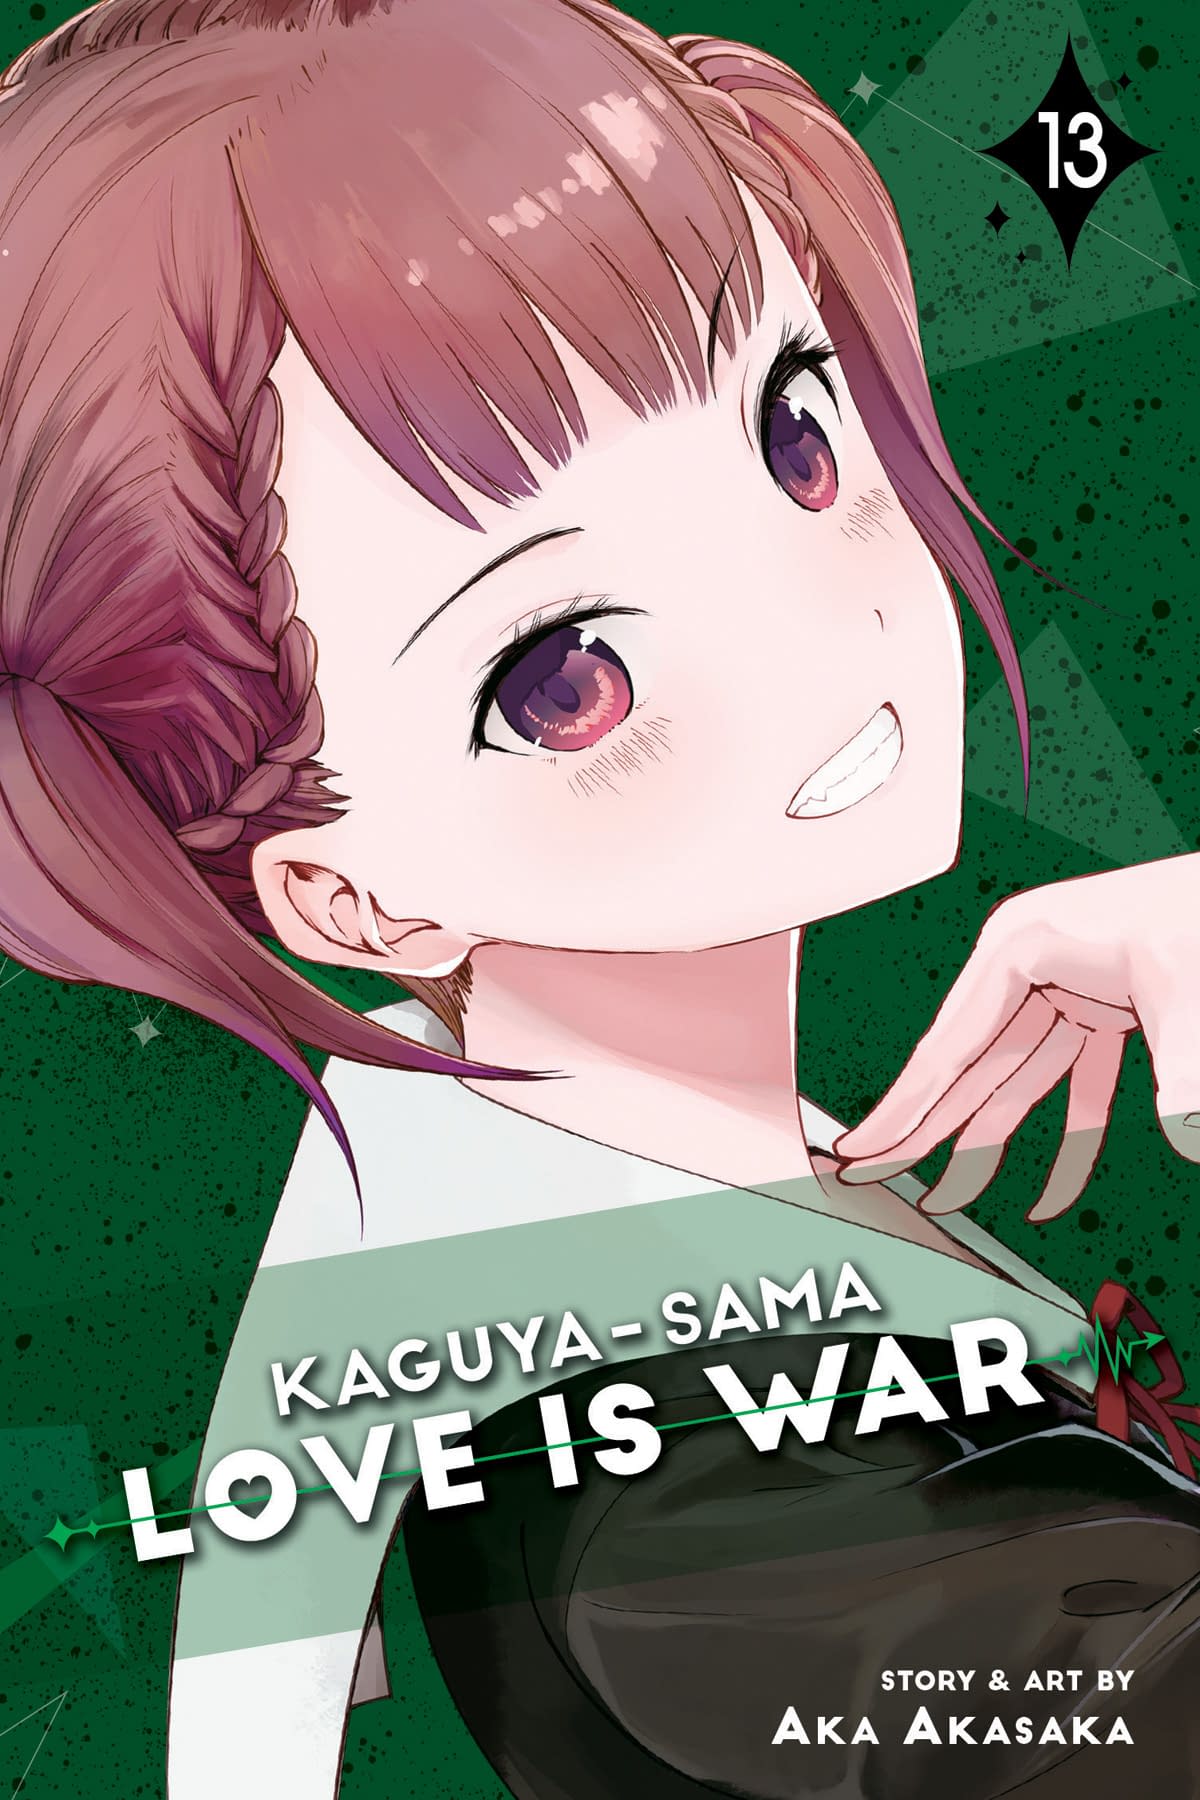 Love Agency appears to be Aka Akasaka's new Kaguya-sama